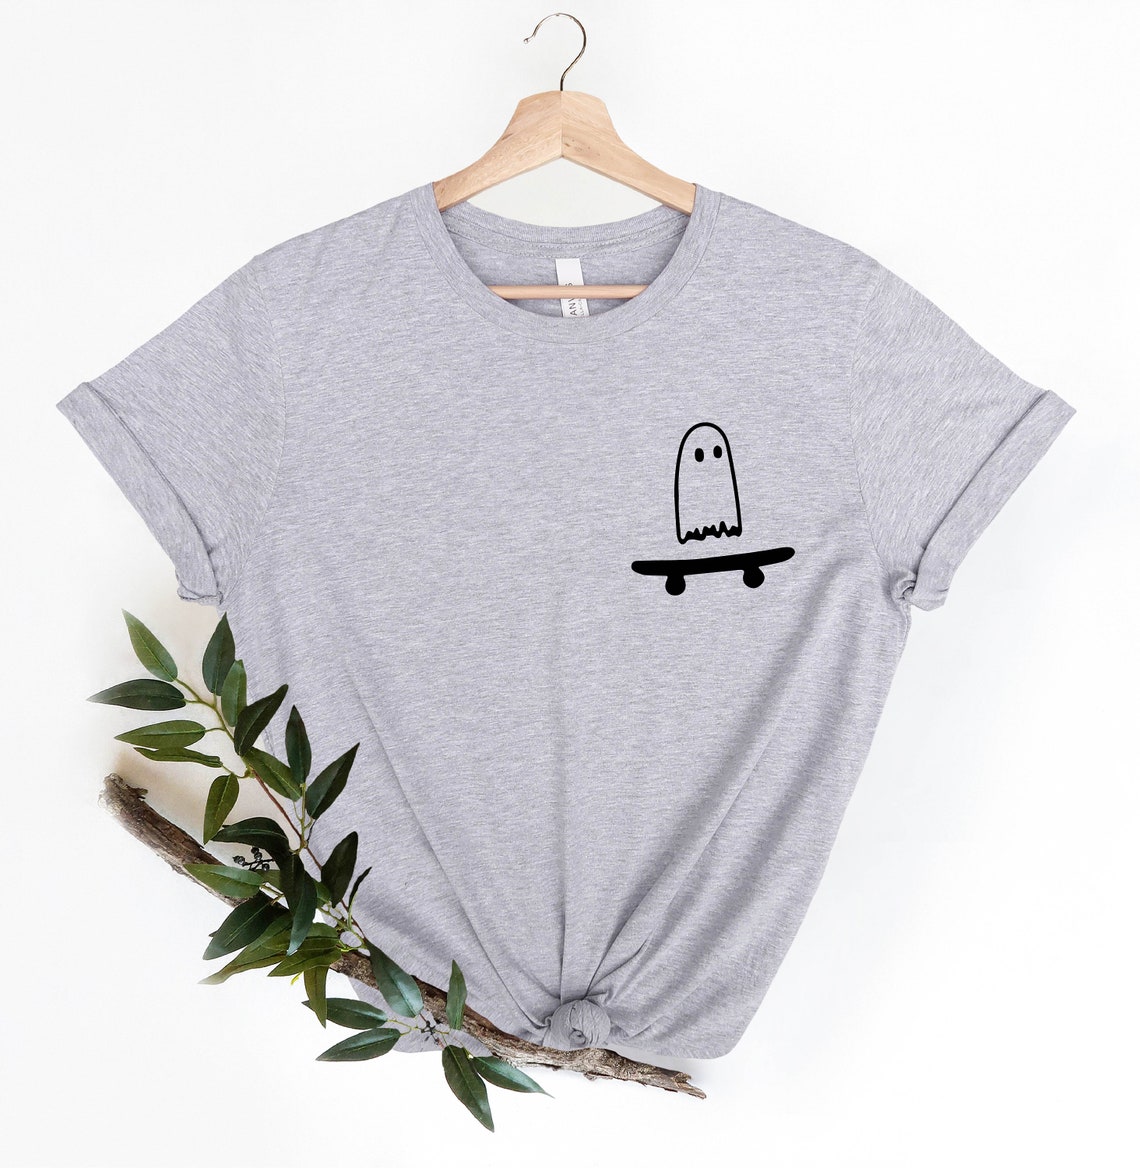 Ghost Pocket Shirt, Cute Ghost Shirt, Skateboarder Shirt, Ghost Skateboard Shirt, Halloween Shirt, Funny Skateboard Shirt, Ghost Shirt